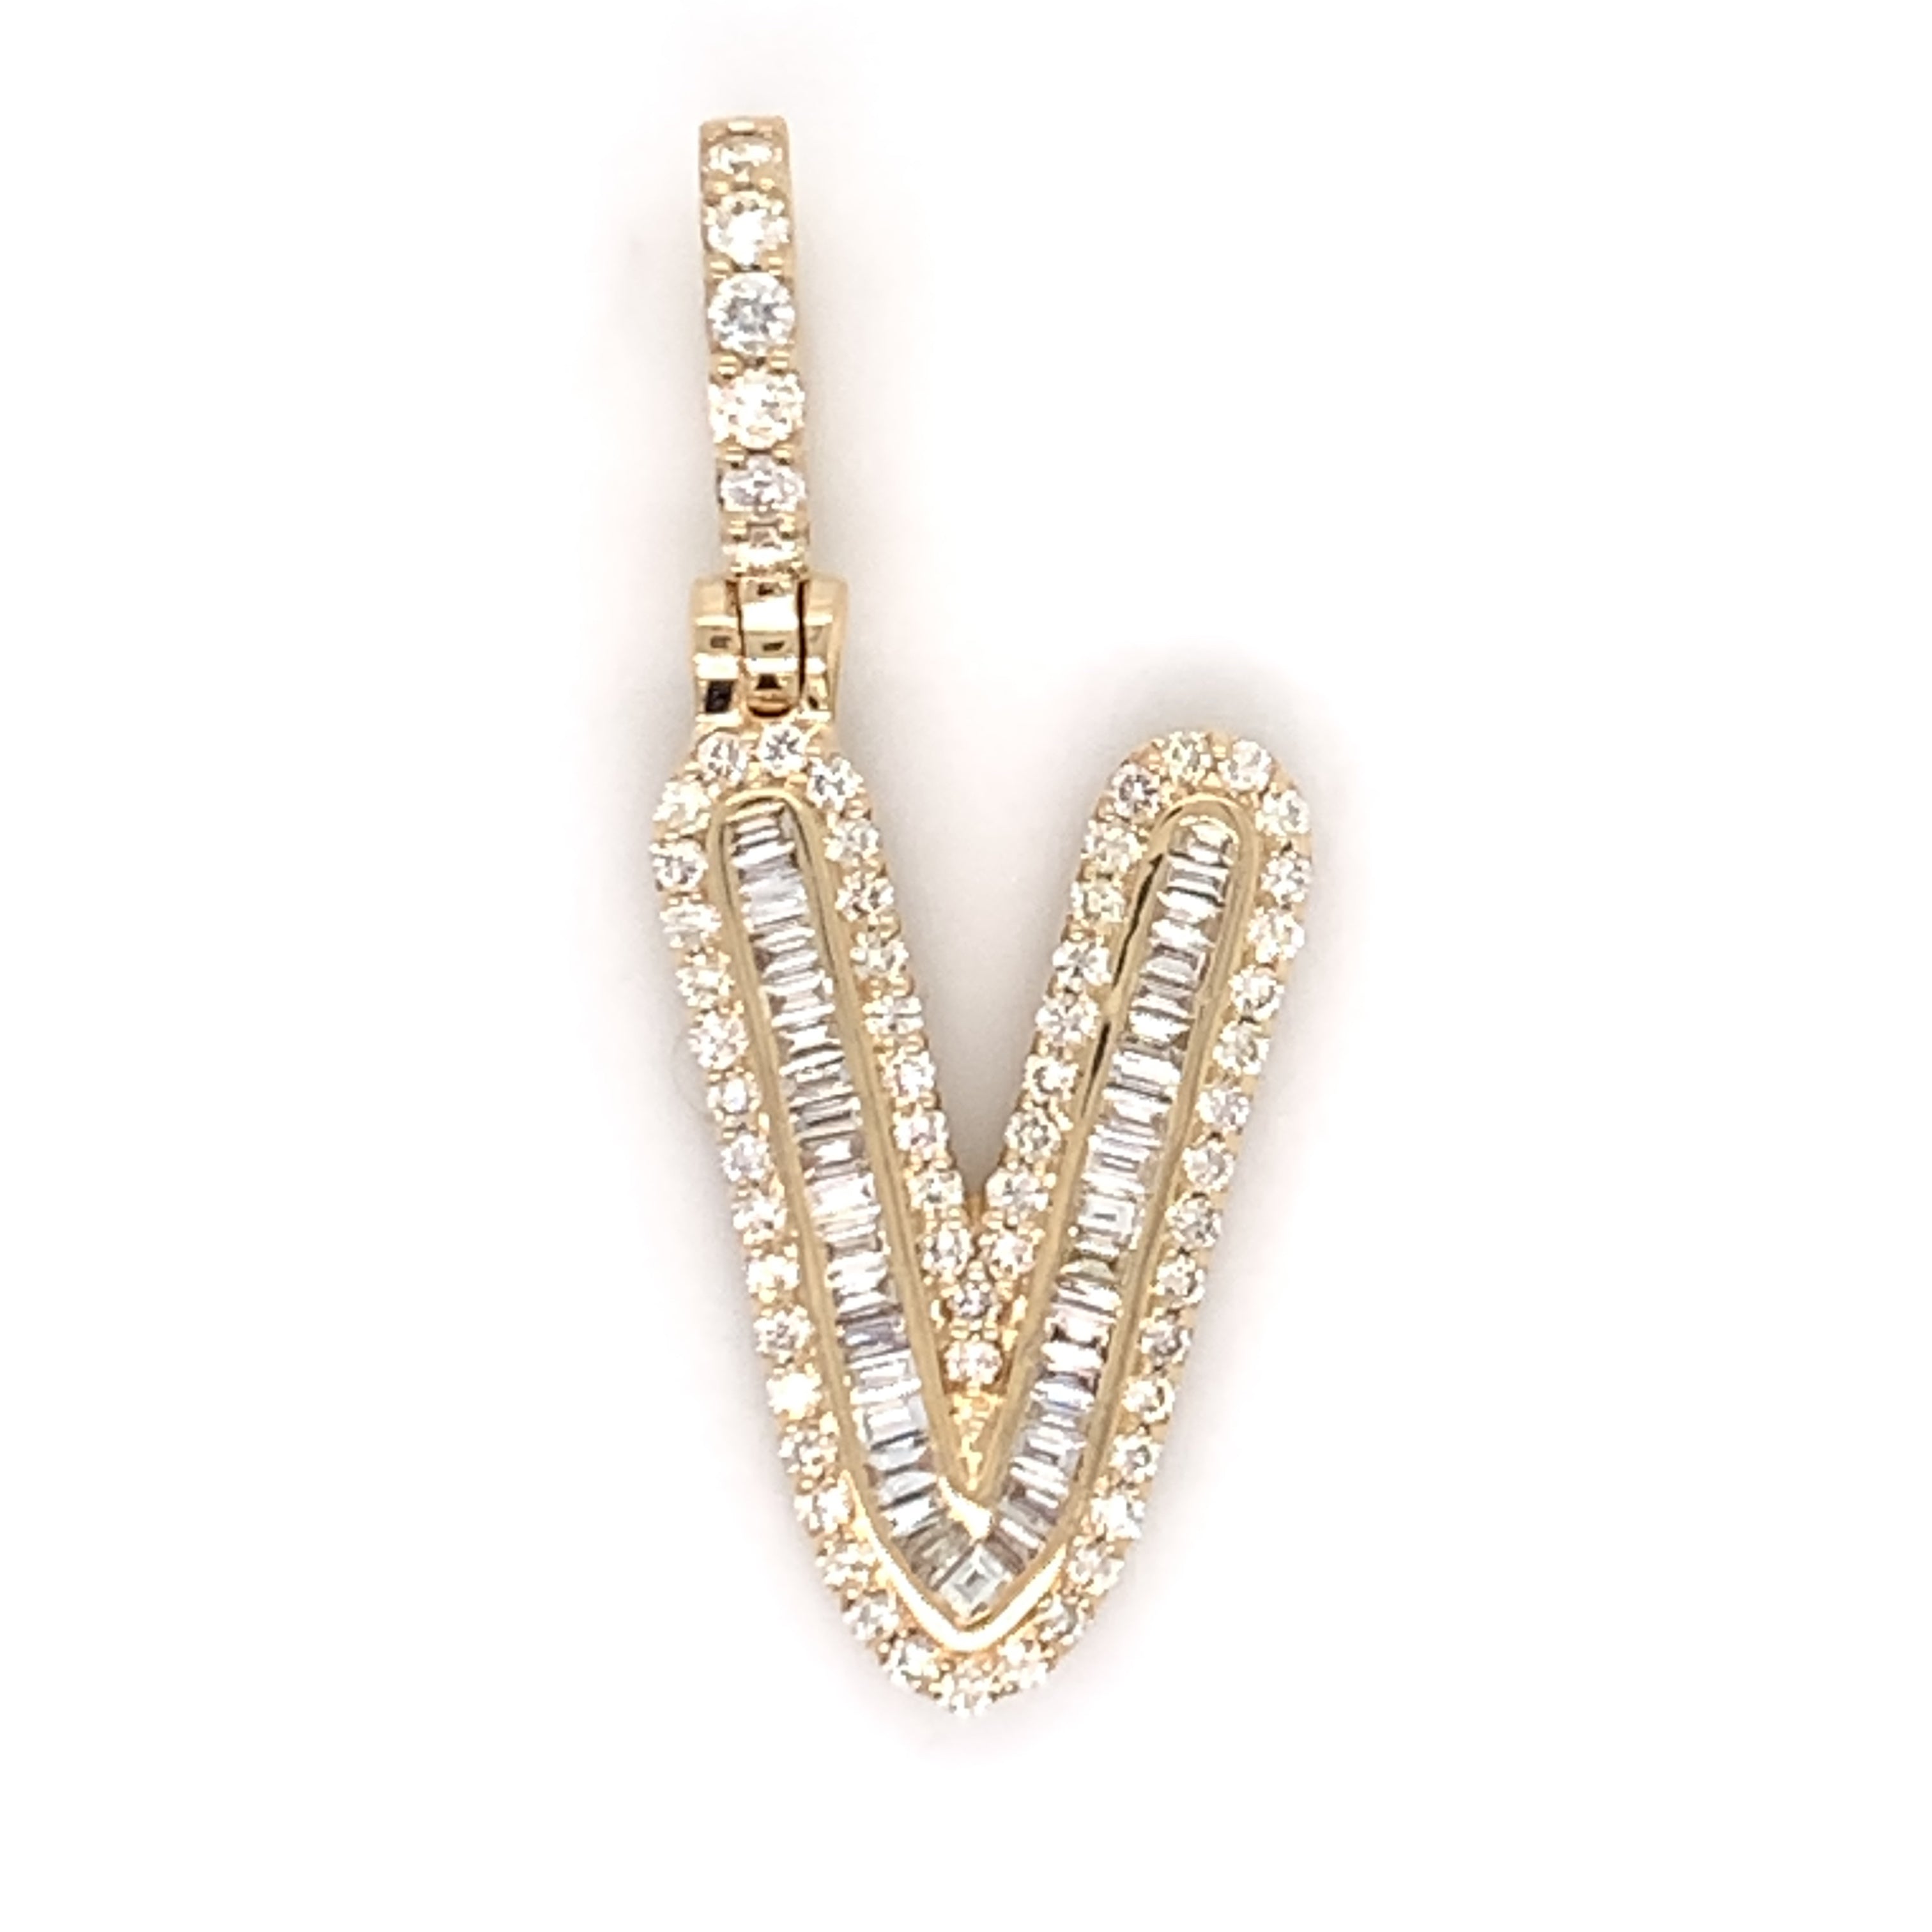 1.00 CT. Diamond Baguette Letter "V" Pendant in 10K Gold - White Carat - USA & Canada